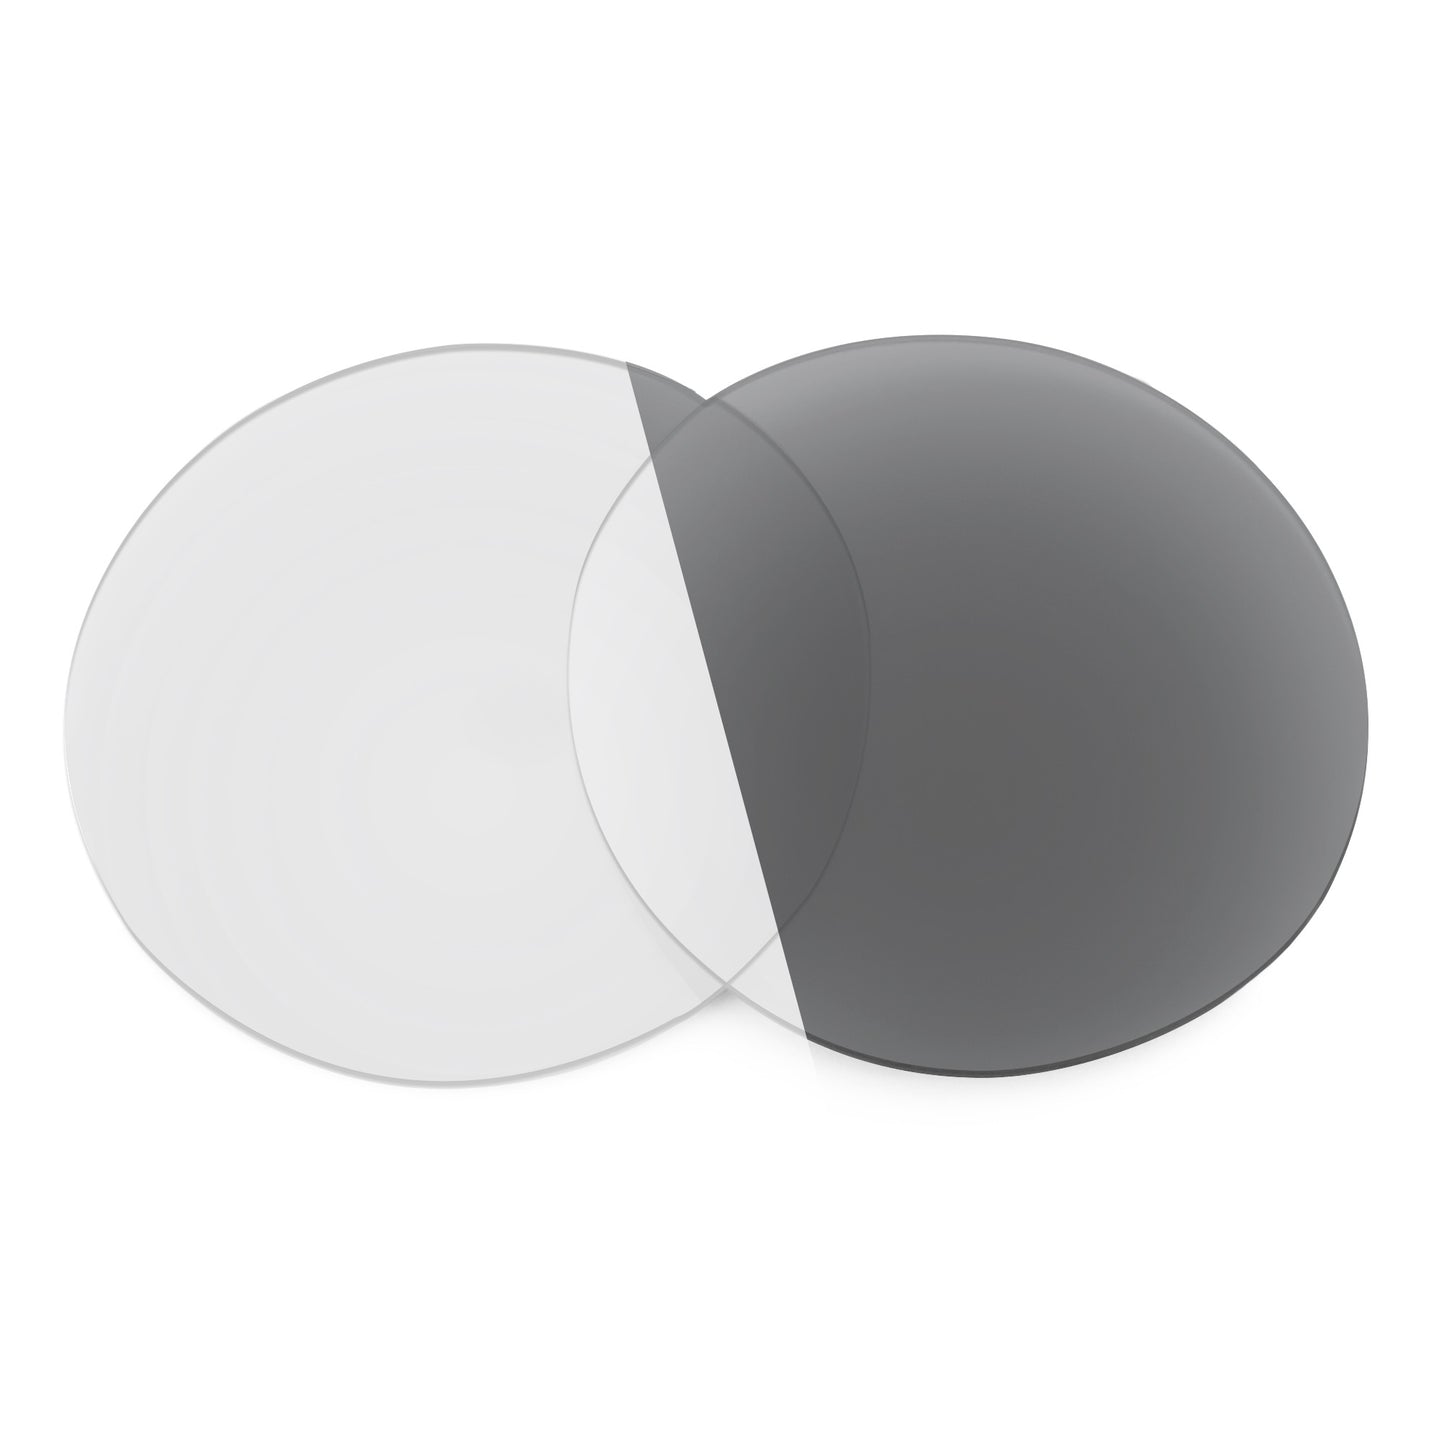 Revant replacement lenses for Maui Jim Kiawe MJ809 Non-Polarized Adapt Gray Photochromic